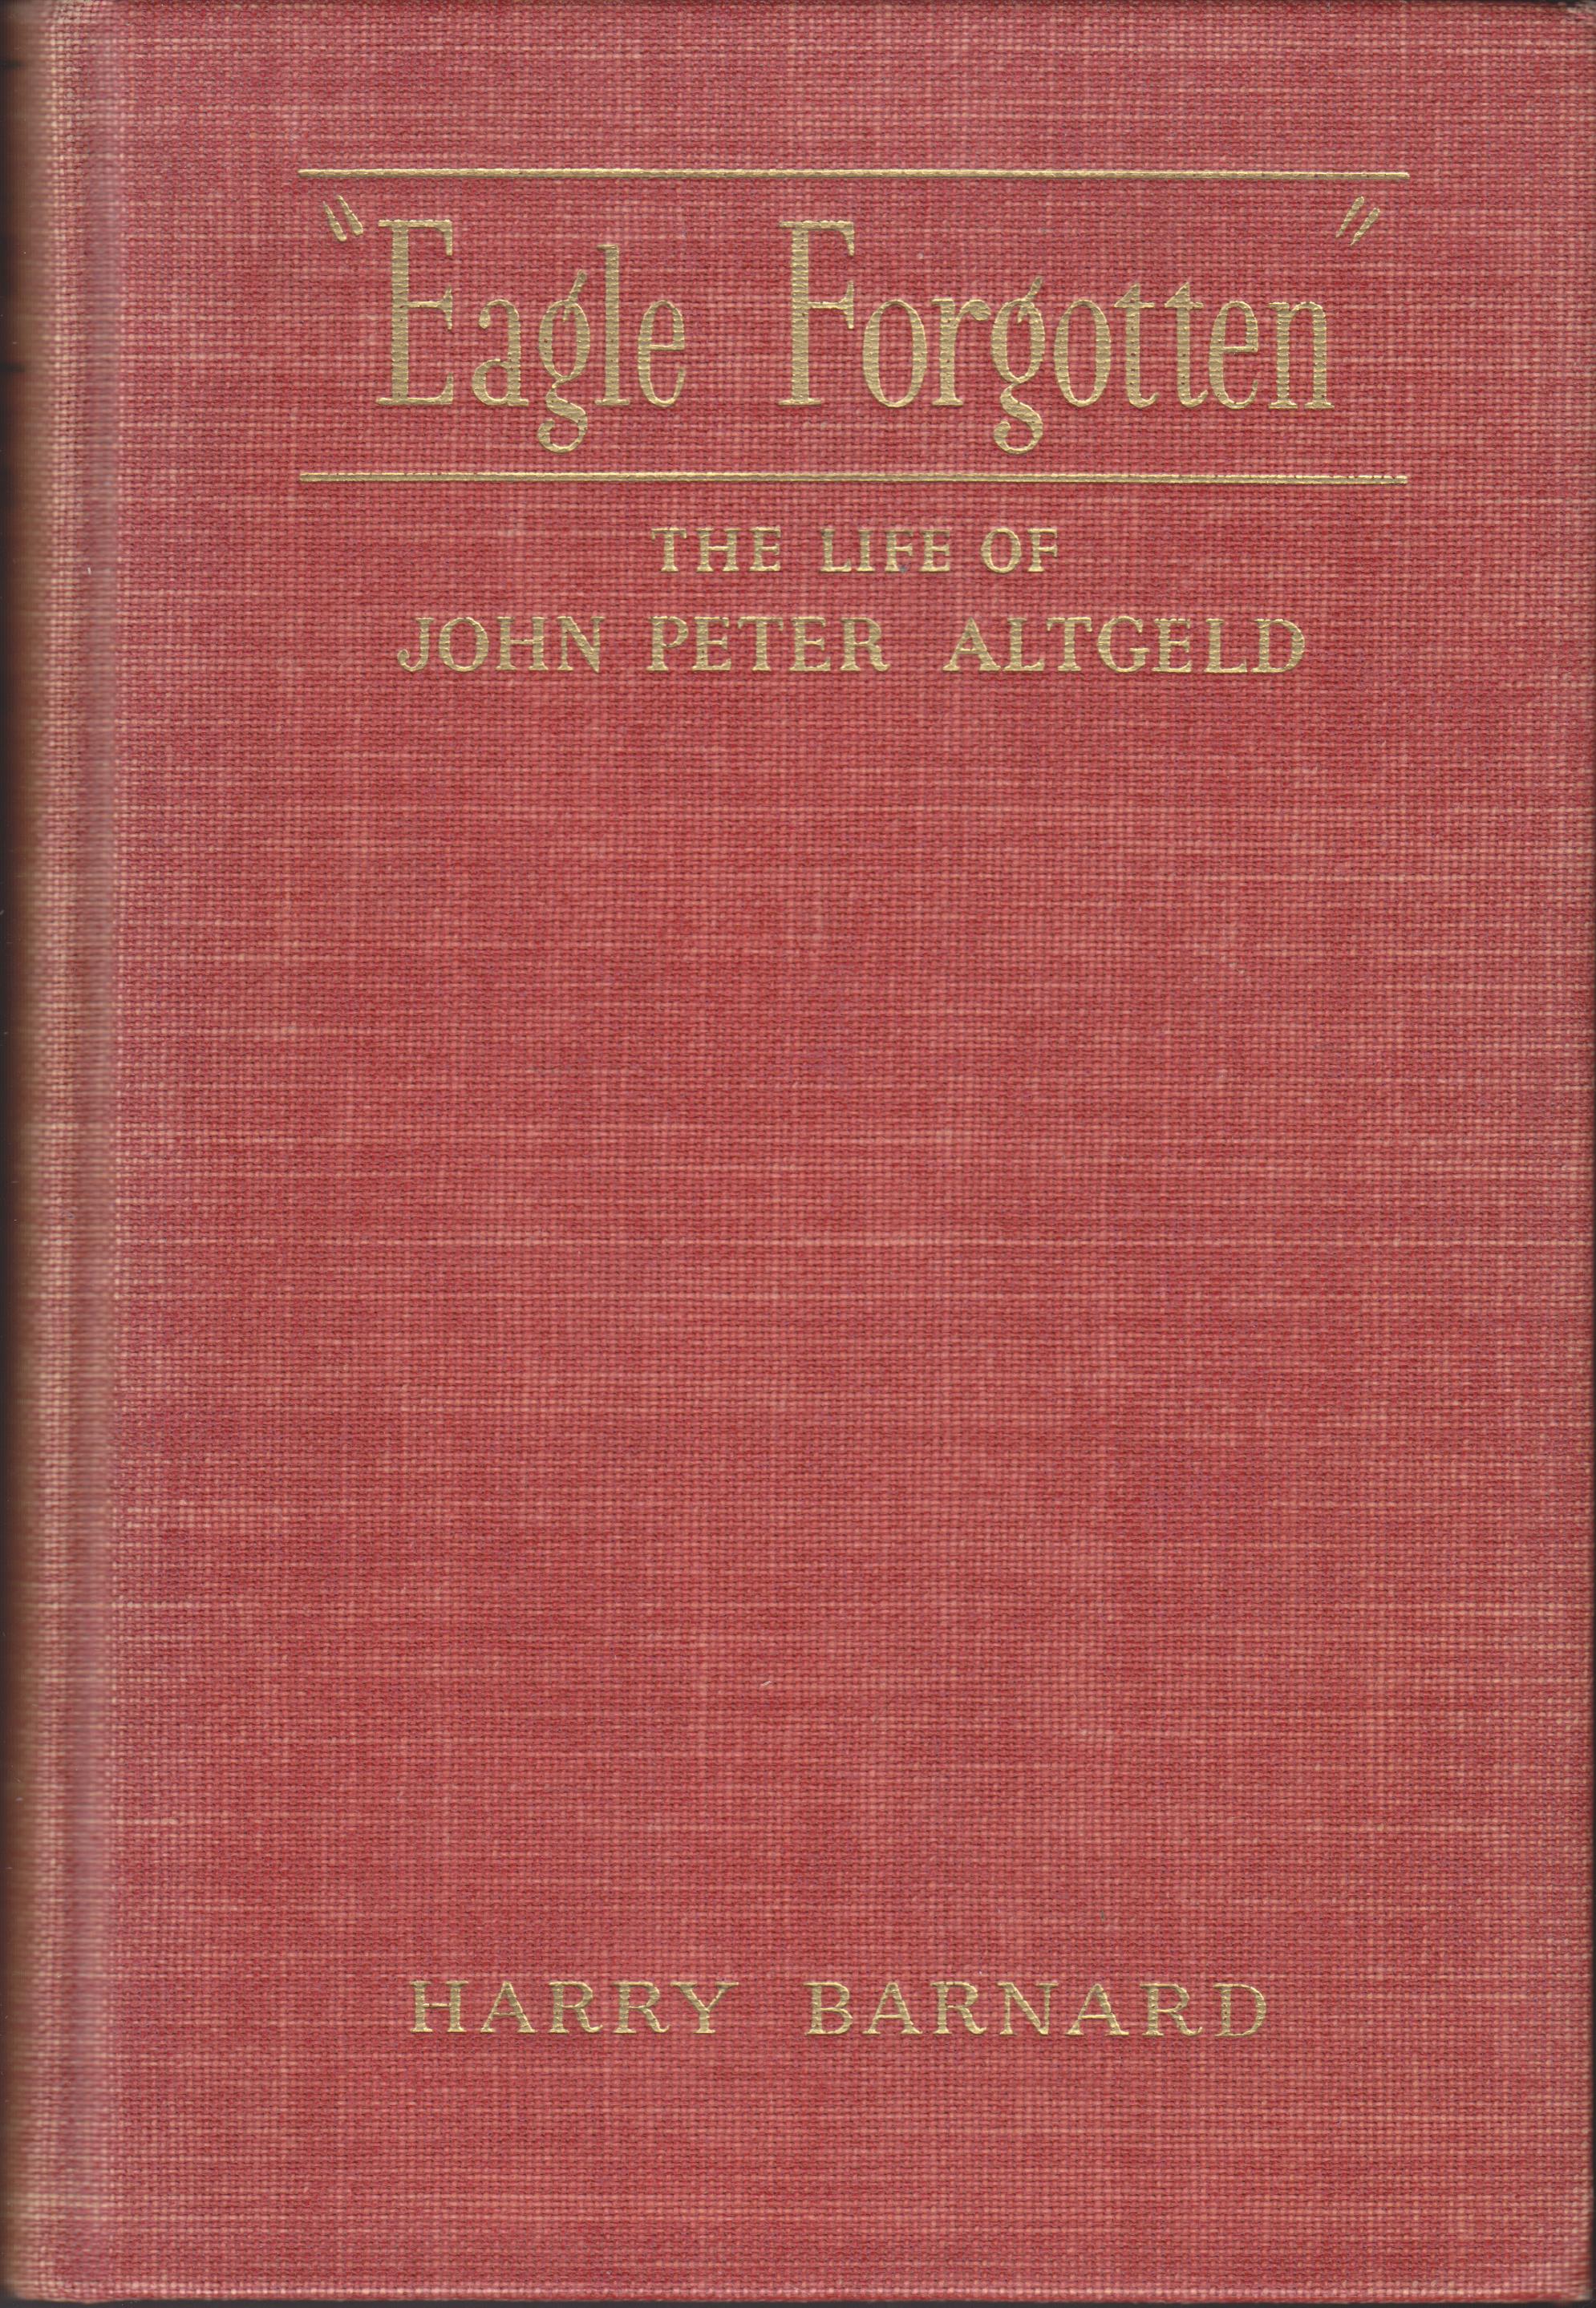 Image for "Eagle Forgotten". The Life Of John Peter Altgeld